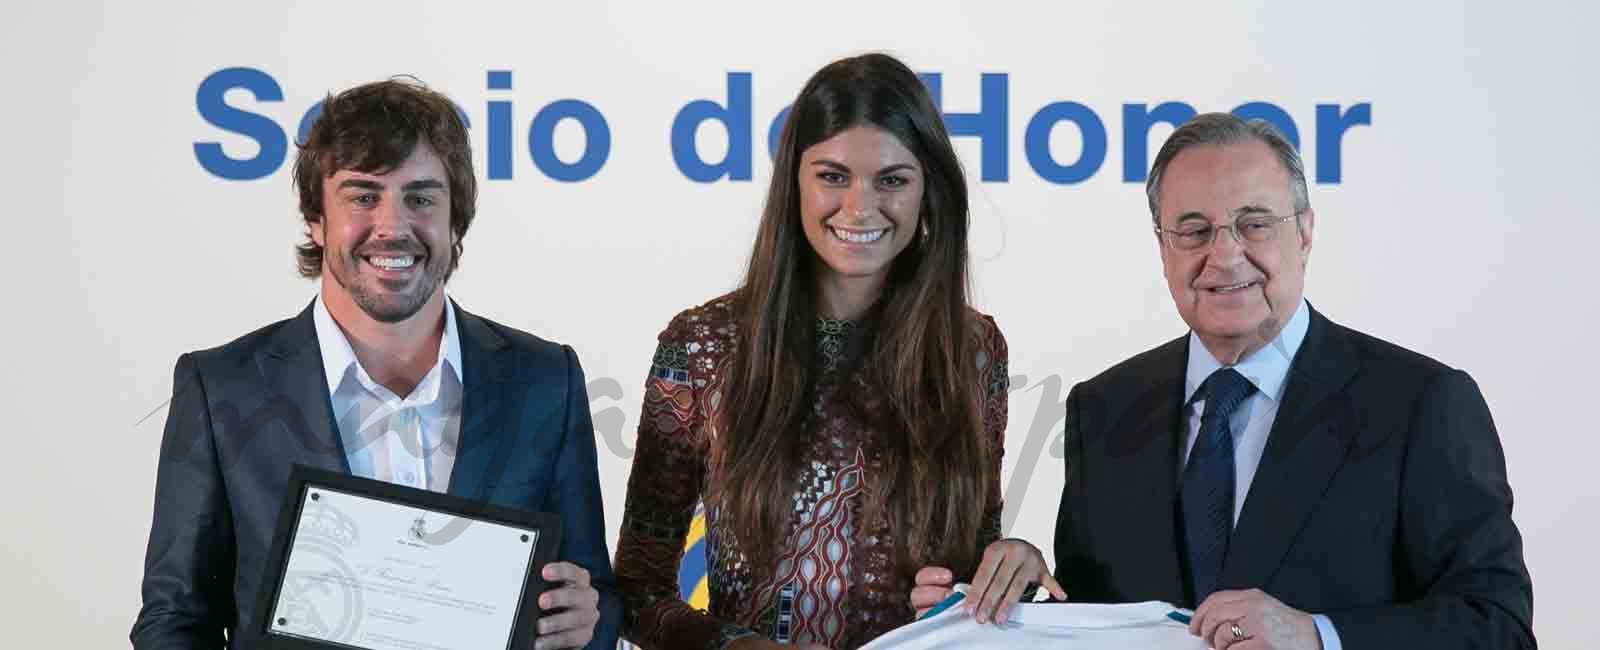 Fernando Alonso presenta a su novia Linda Morselli en Madrid